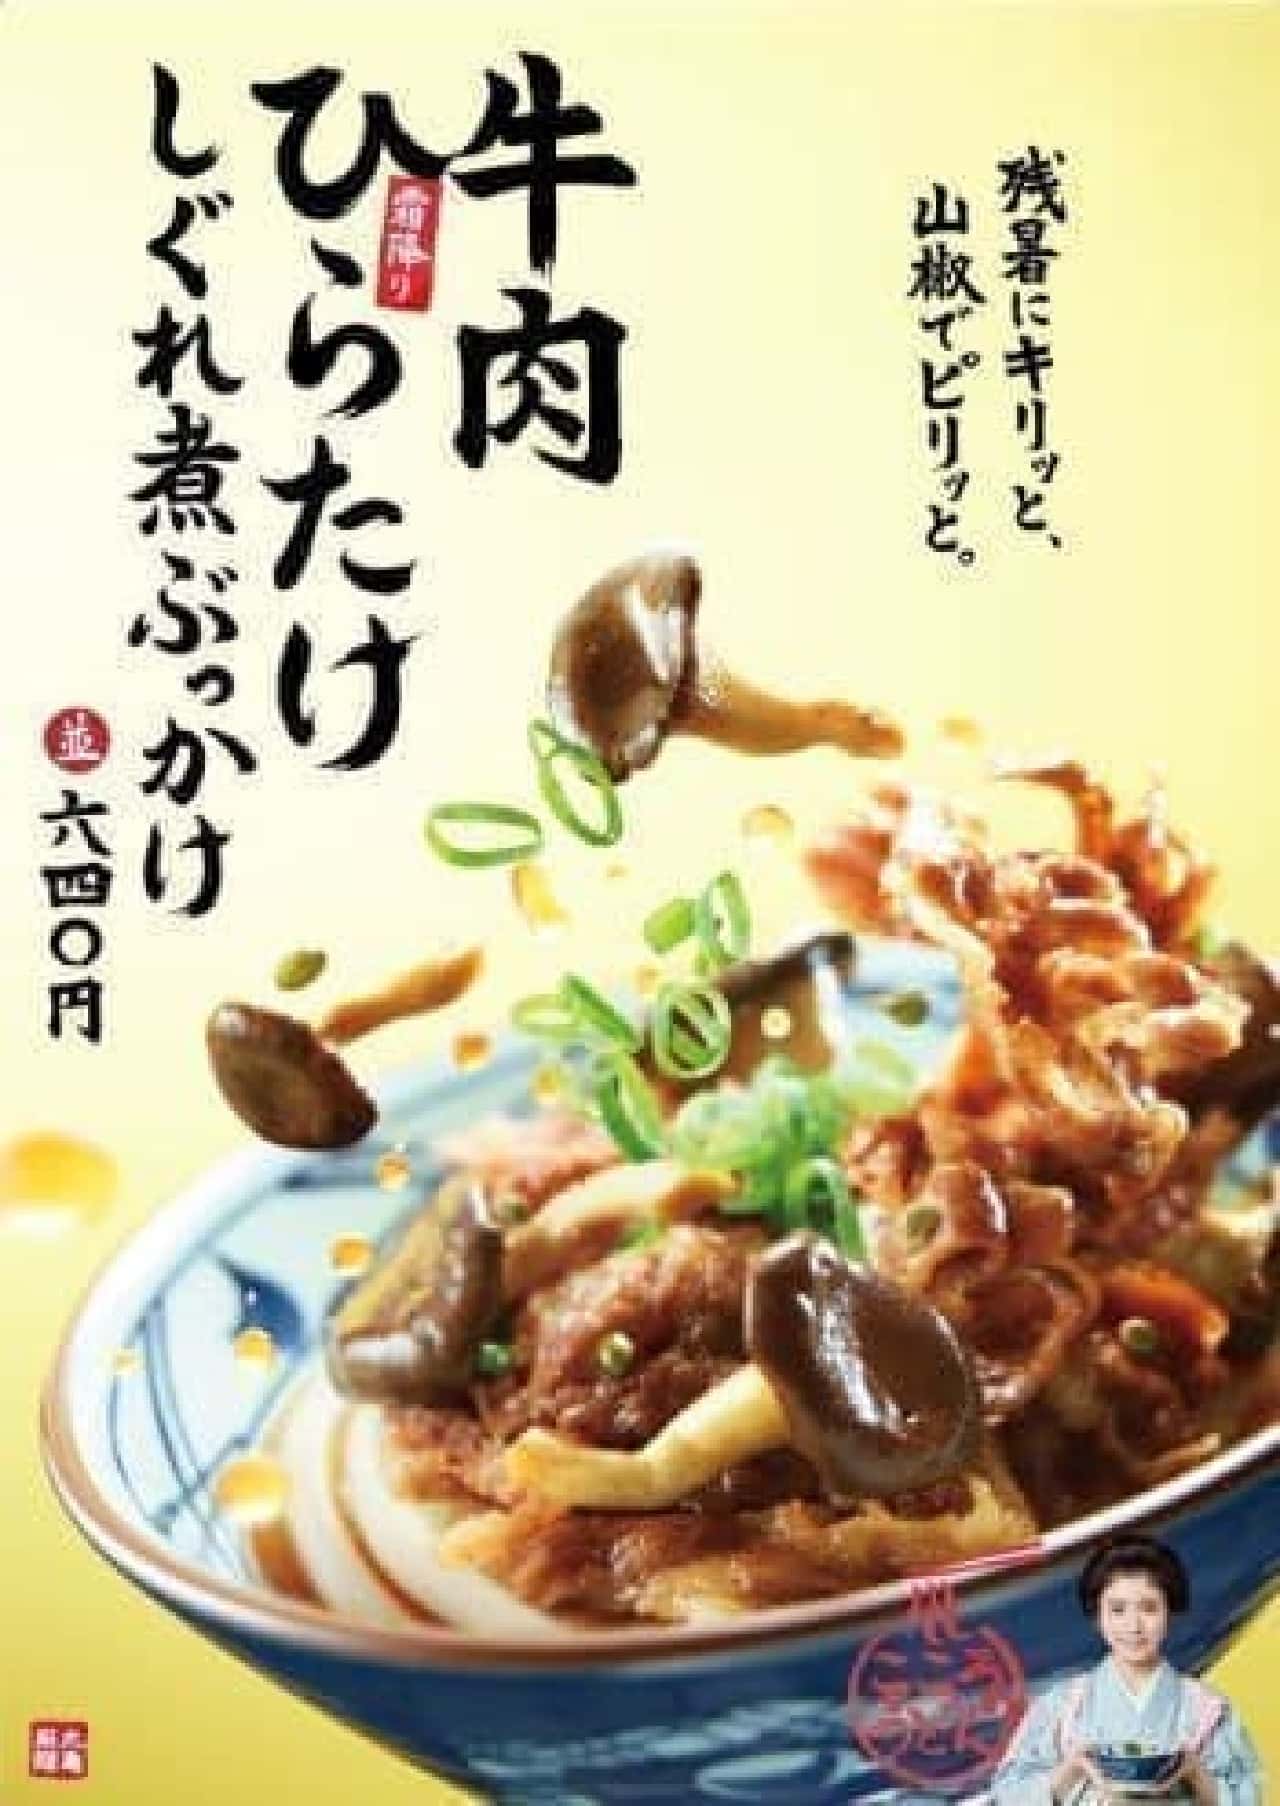 Marugame Seimen "Beef Oyster Mushroom Boiled Bukkake"